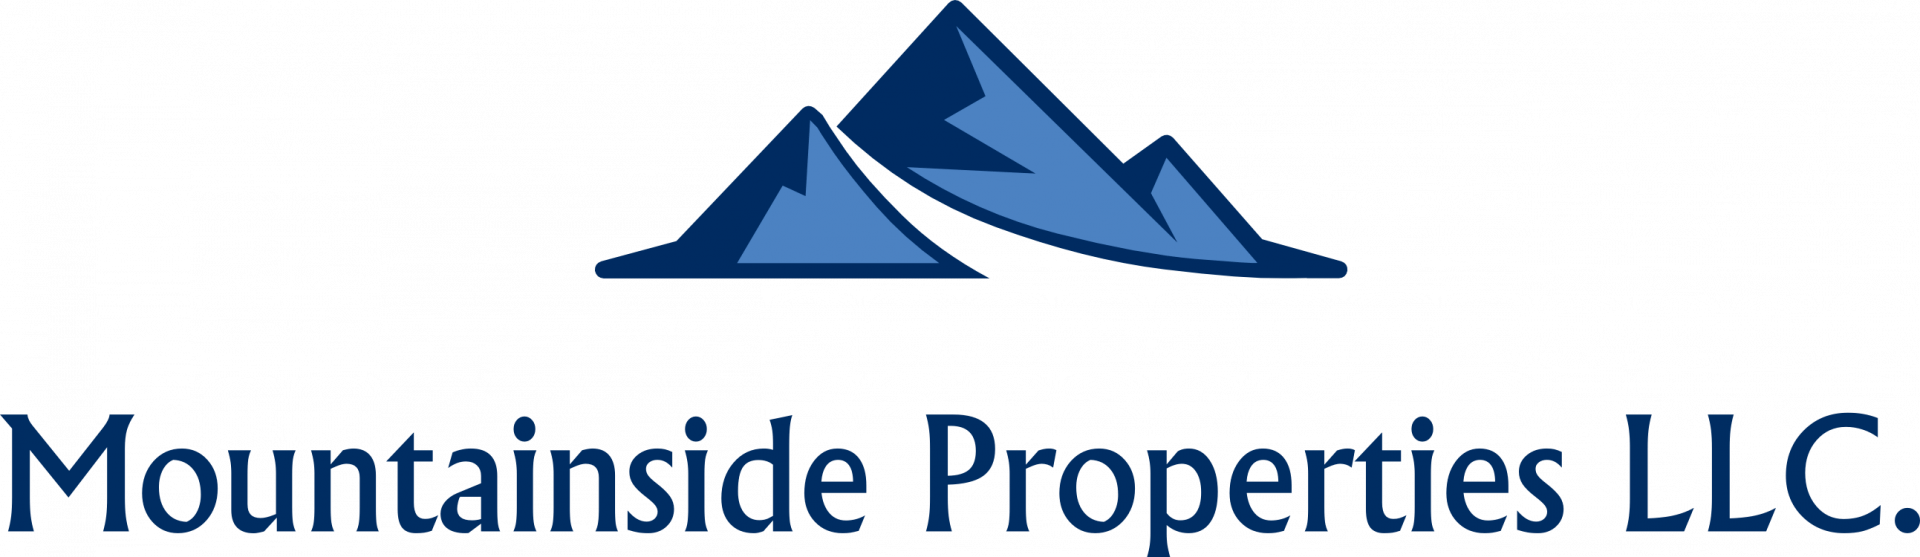 Mountainside Properties LLC  logo